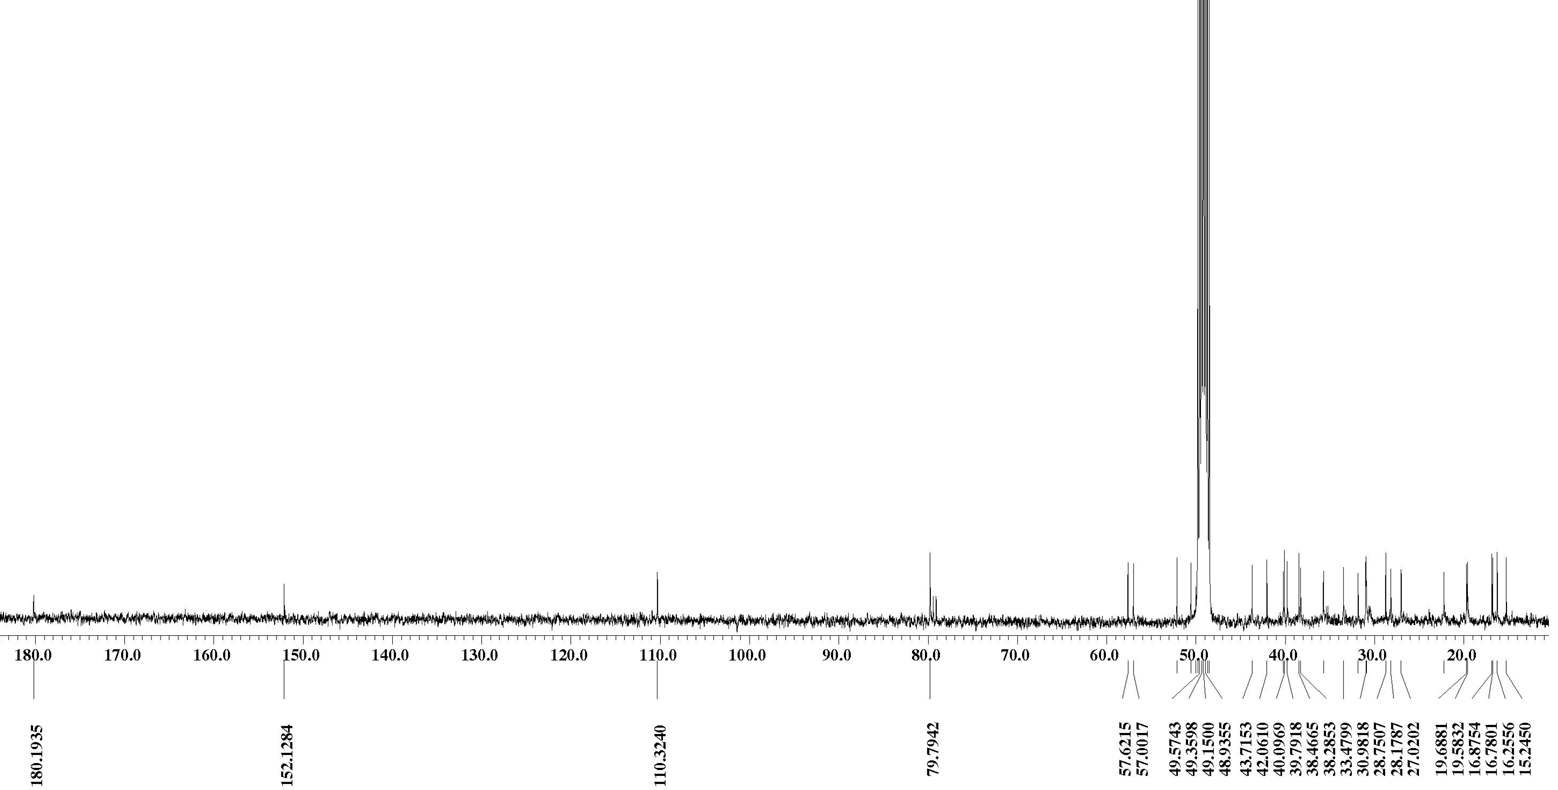 Figure 9. 13C-NMR spectrum of compound 3 in CD3OD